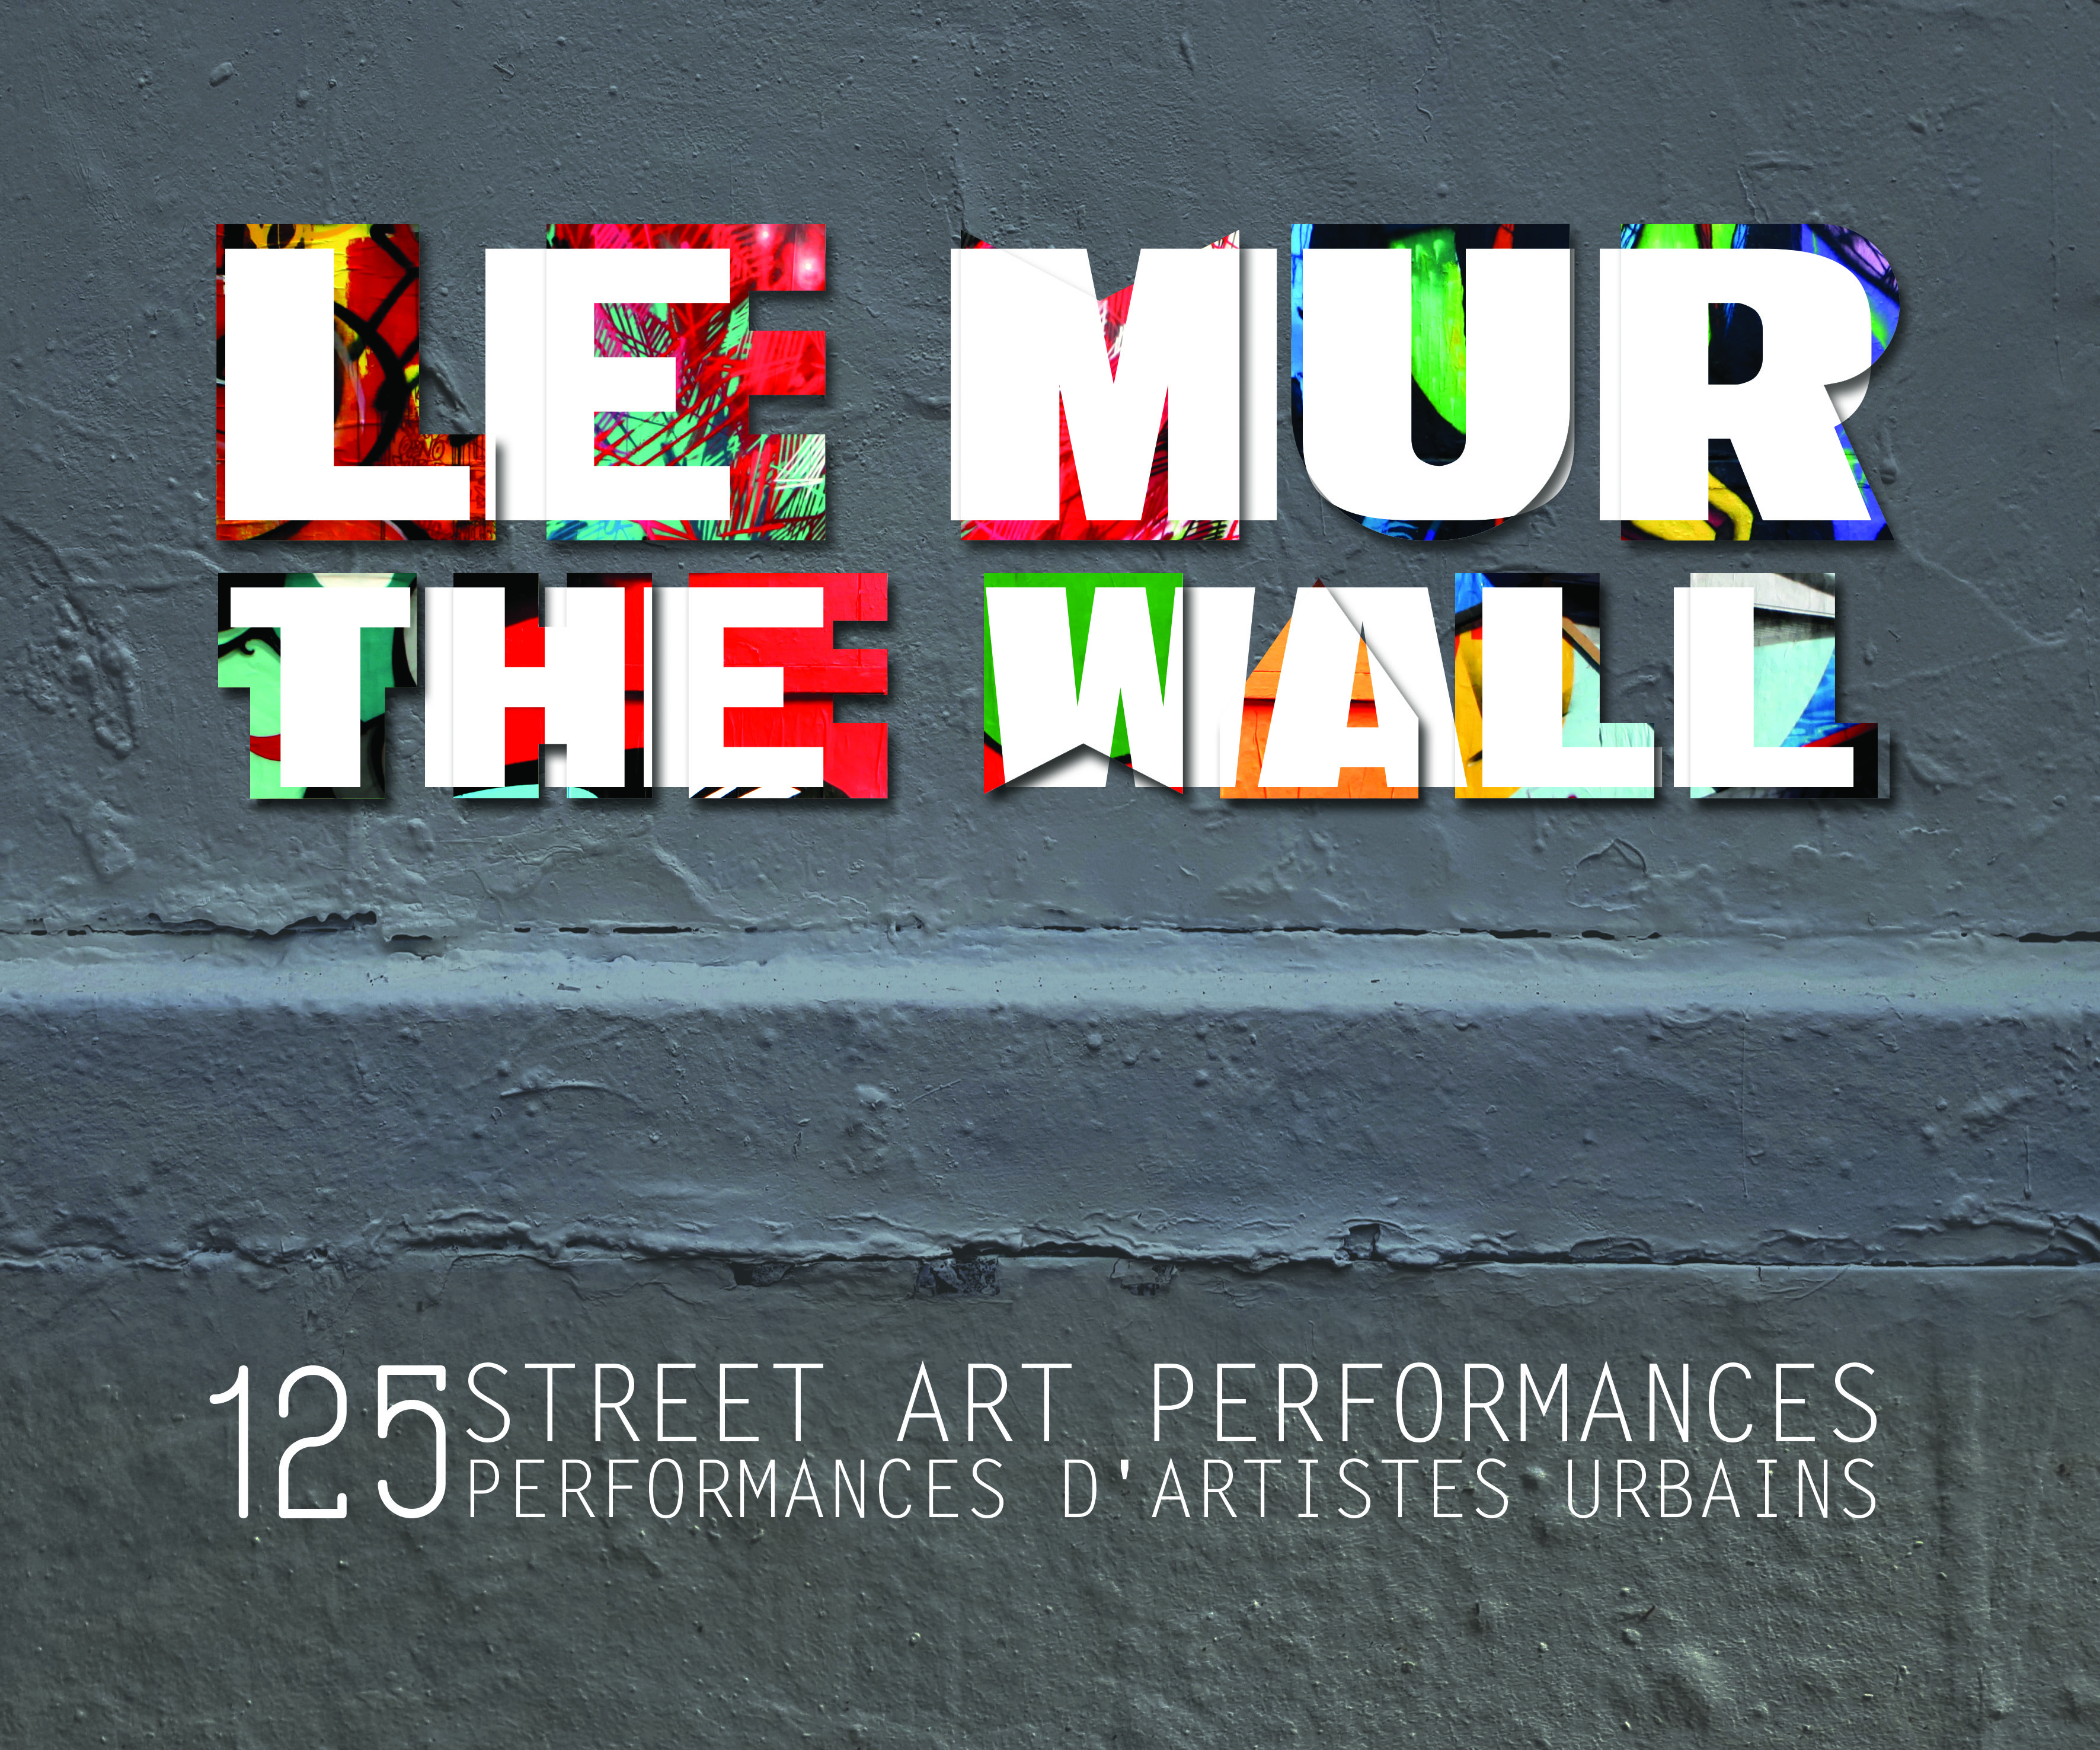 le mur the wall couv 2016 modif fin fin-5